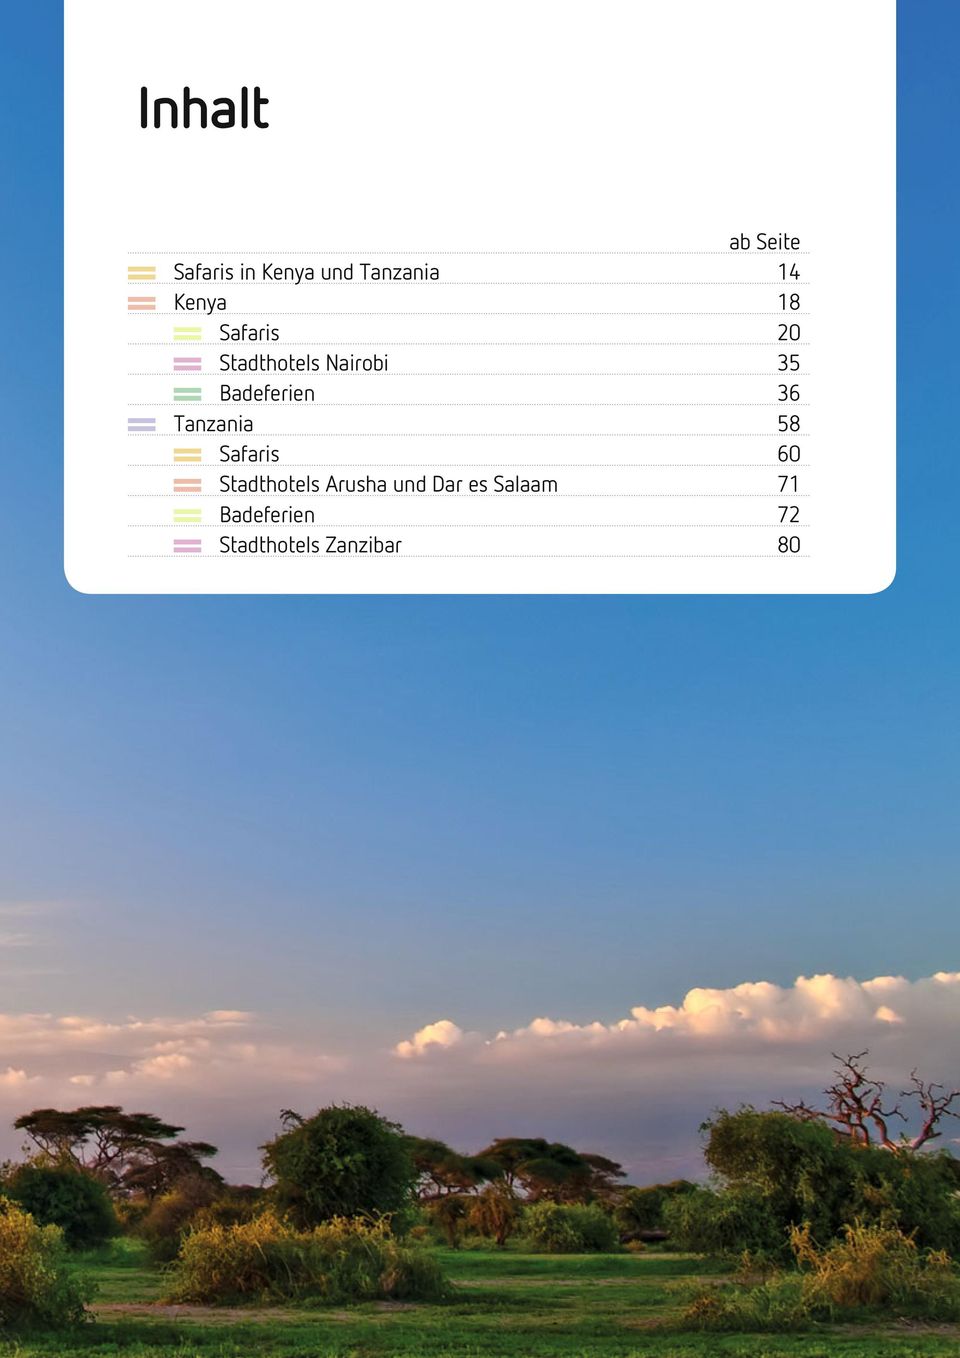 Badeferien 36 Tanzania 58 Safaris 60 Stadthotels